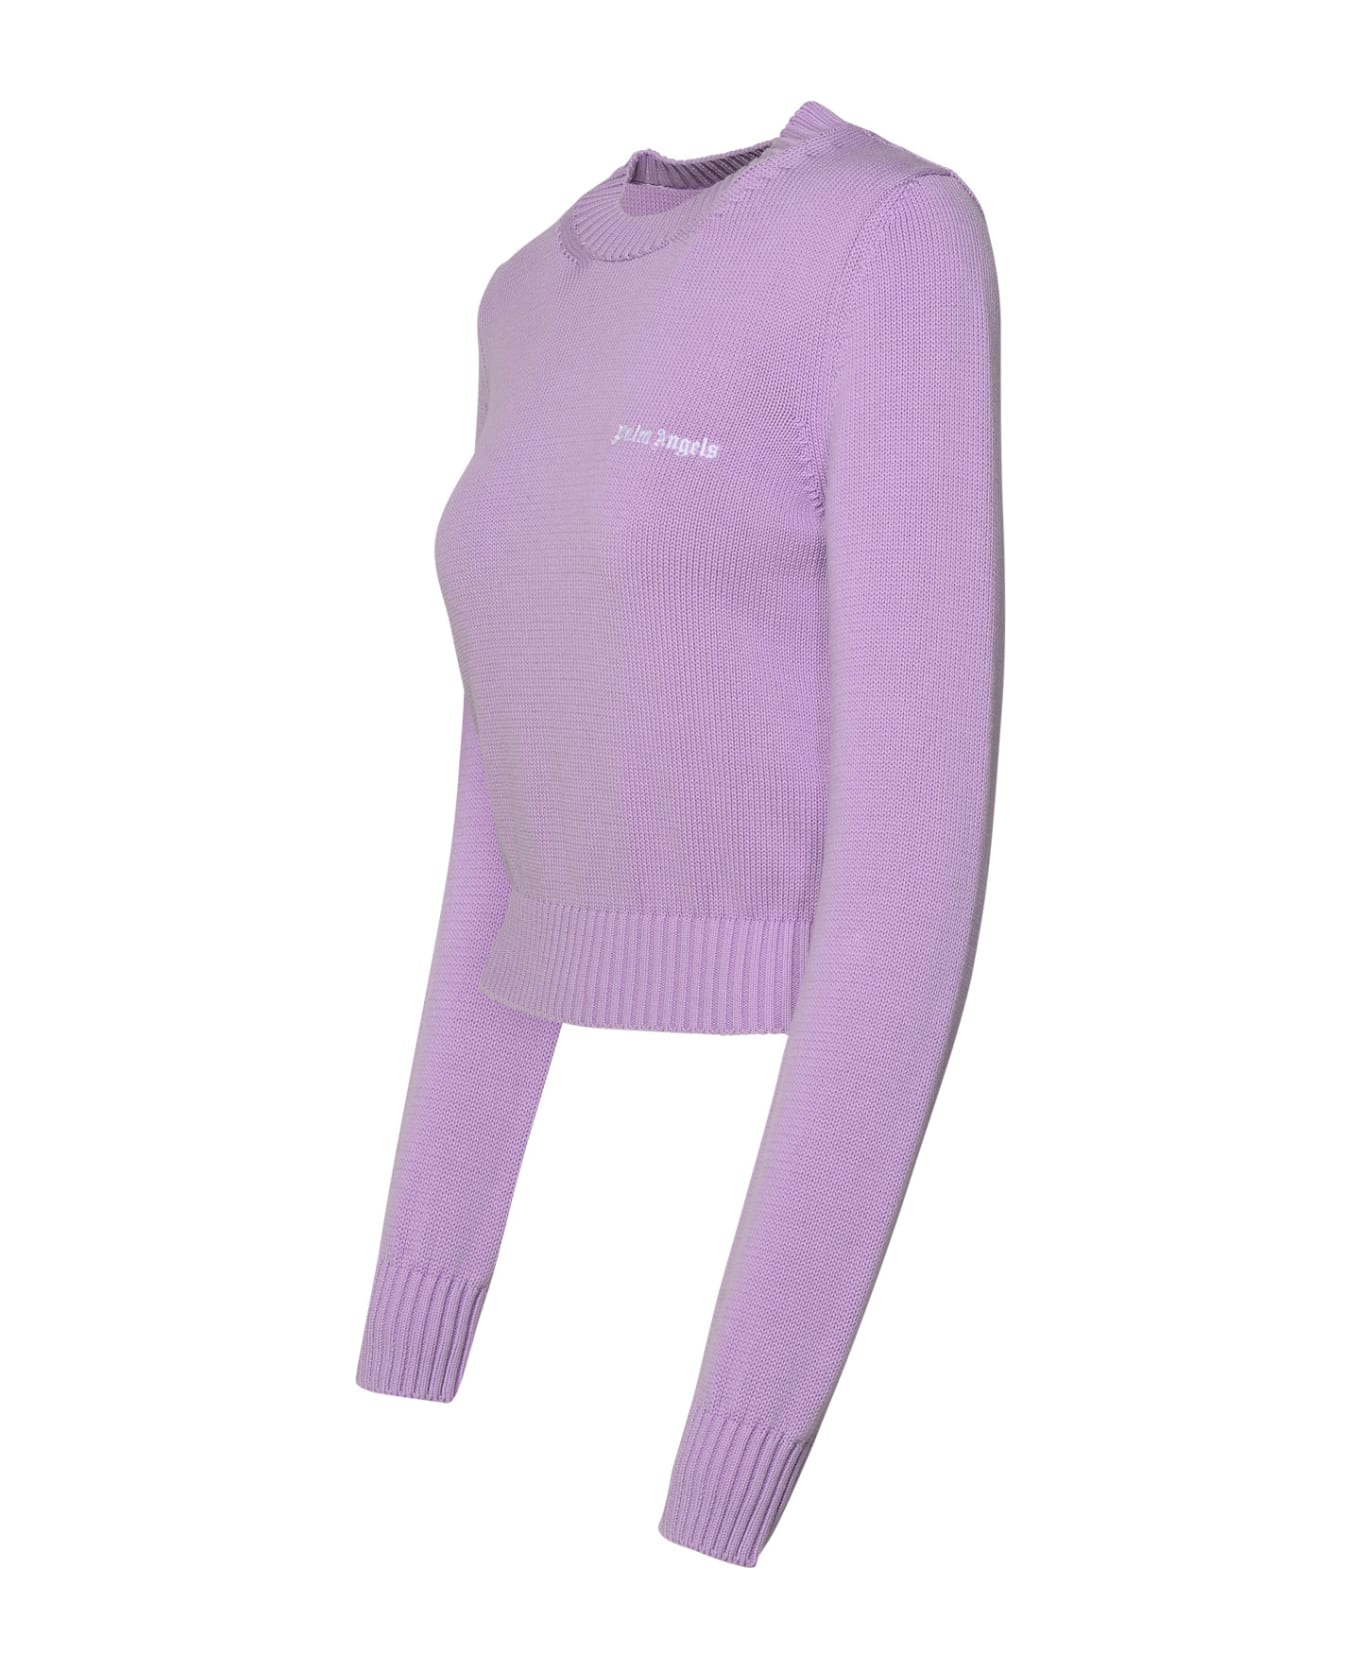 Palm Angels Lilac Cotton Sweater - Lilla ニットウェア